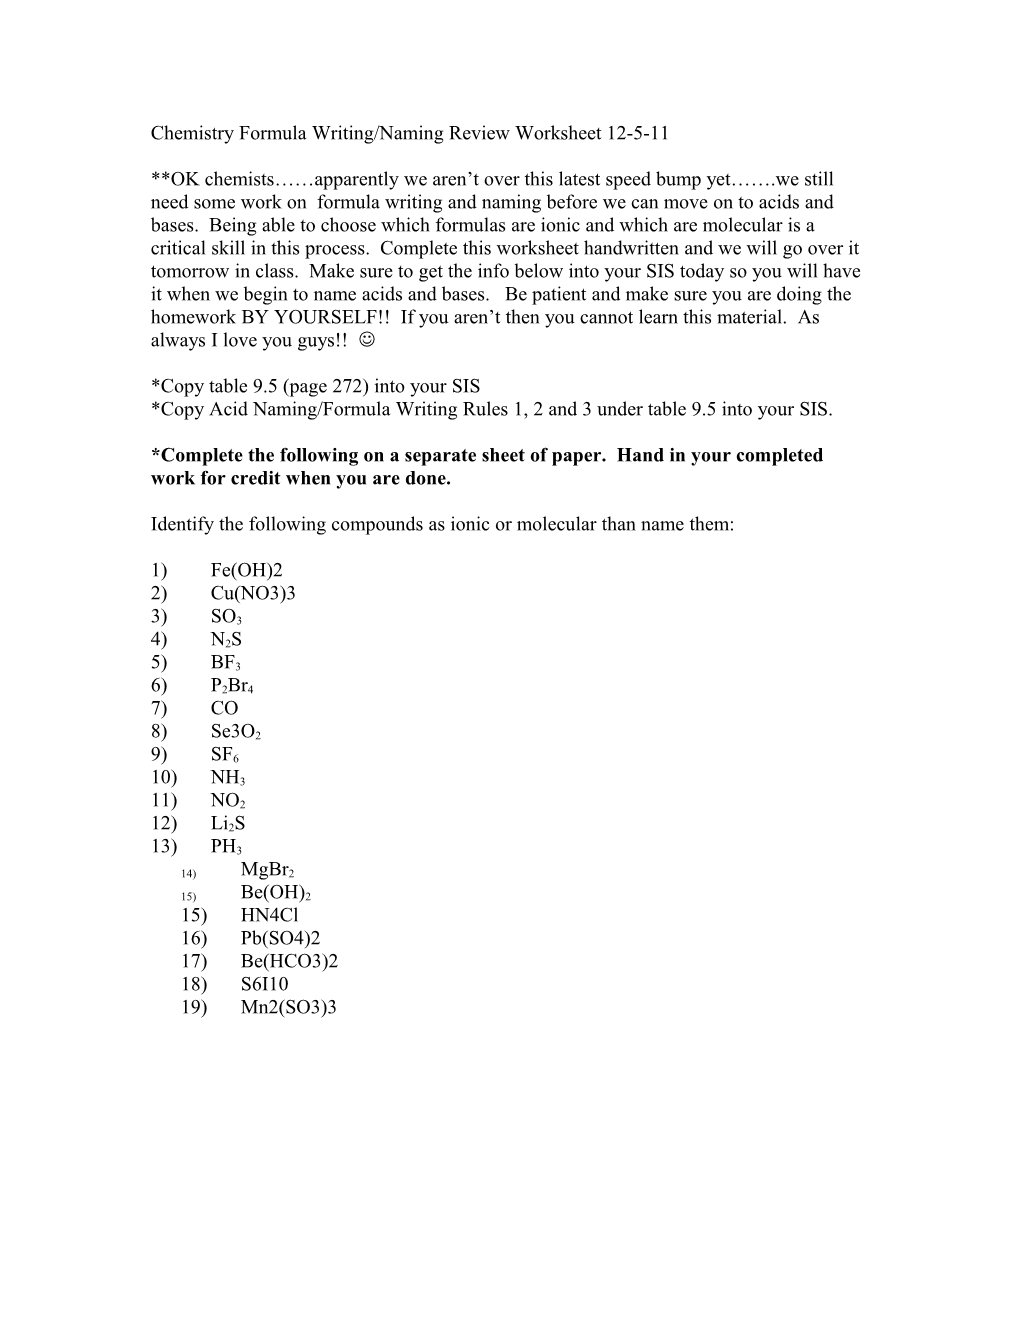 Chemistry Formula Writing/Naming Review Worksheet 1-3-11